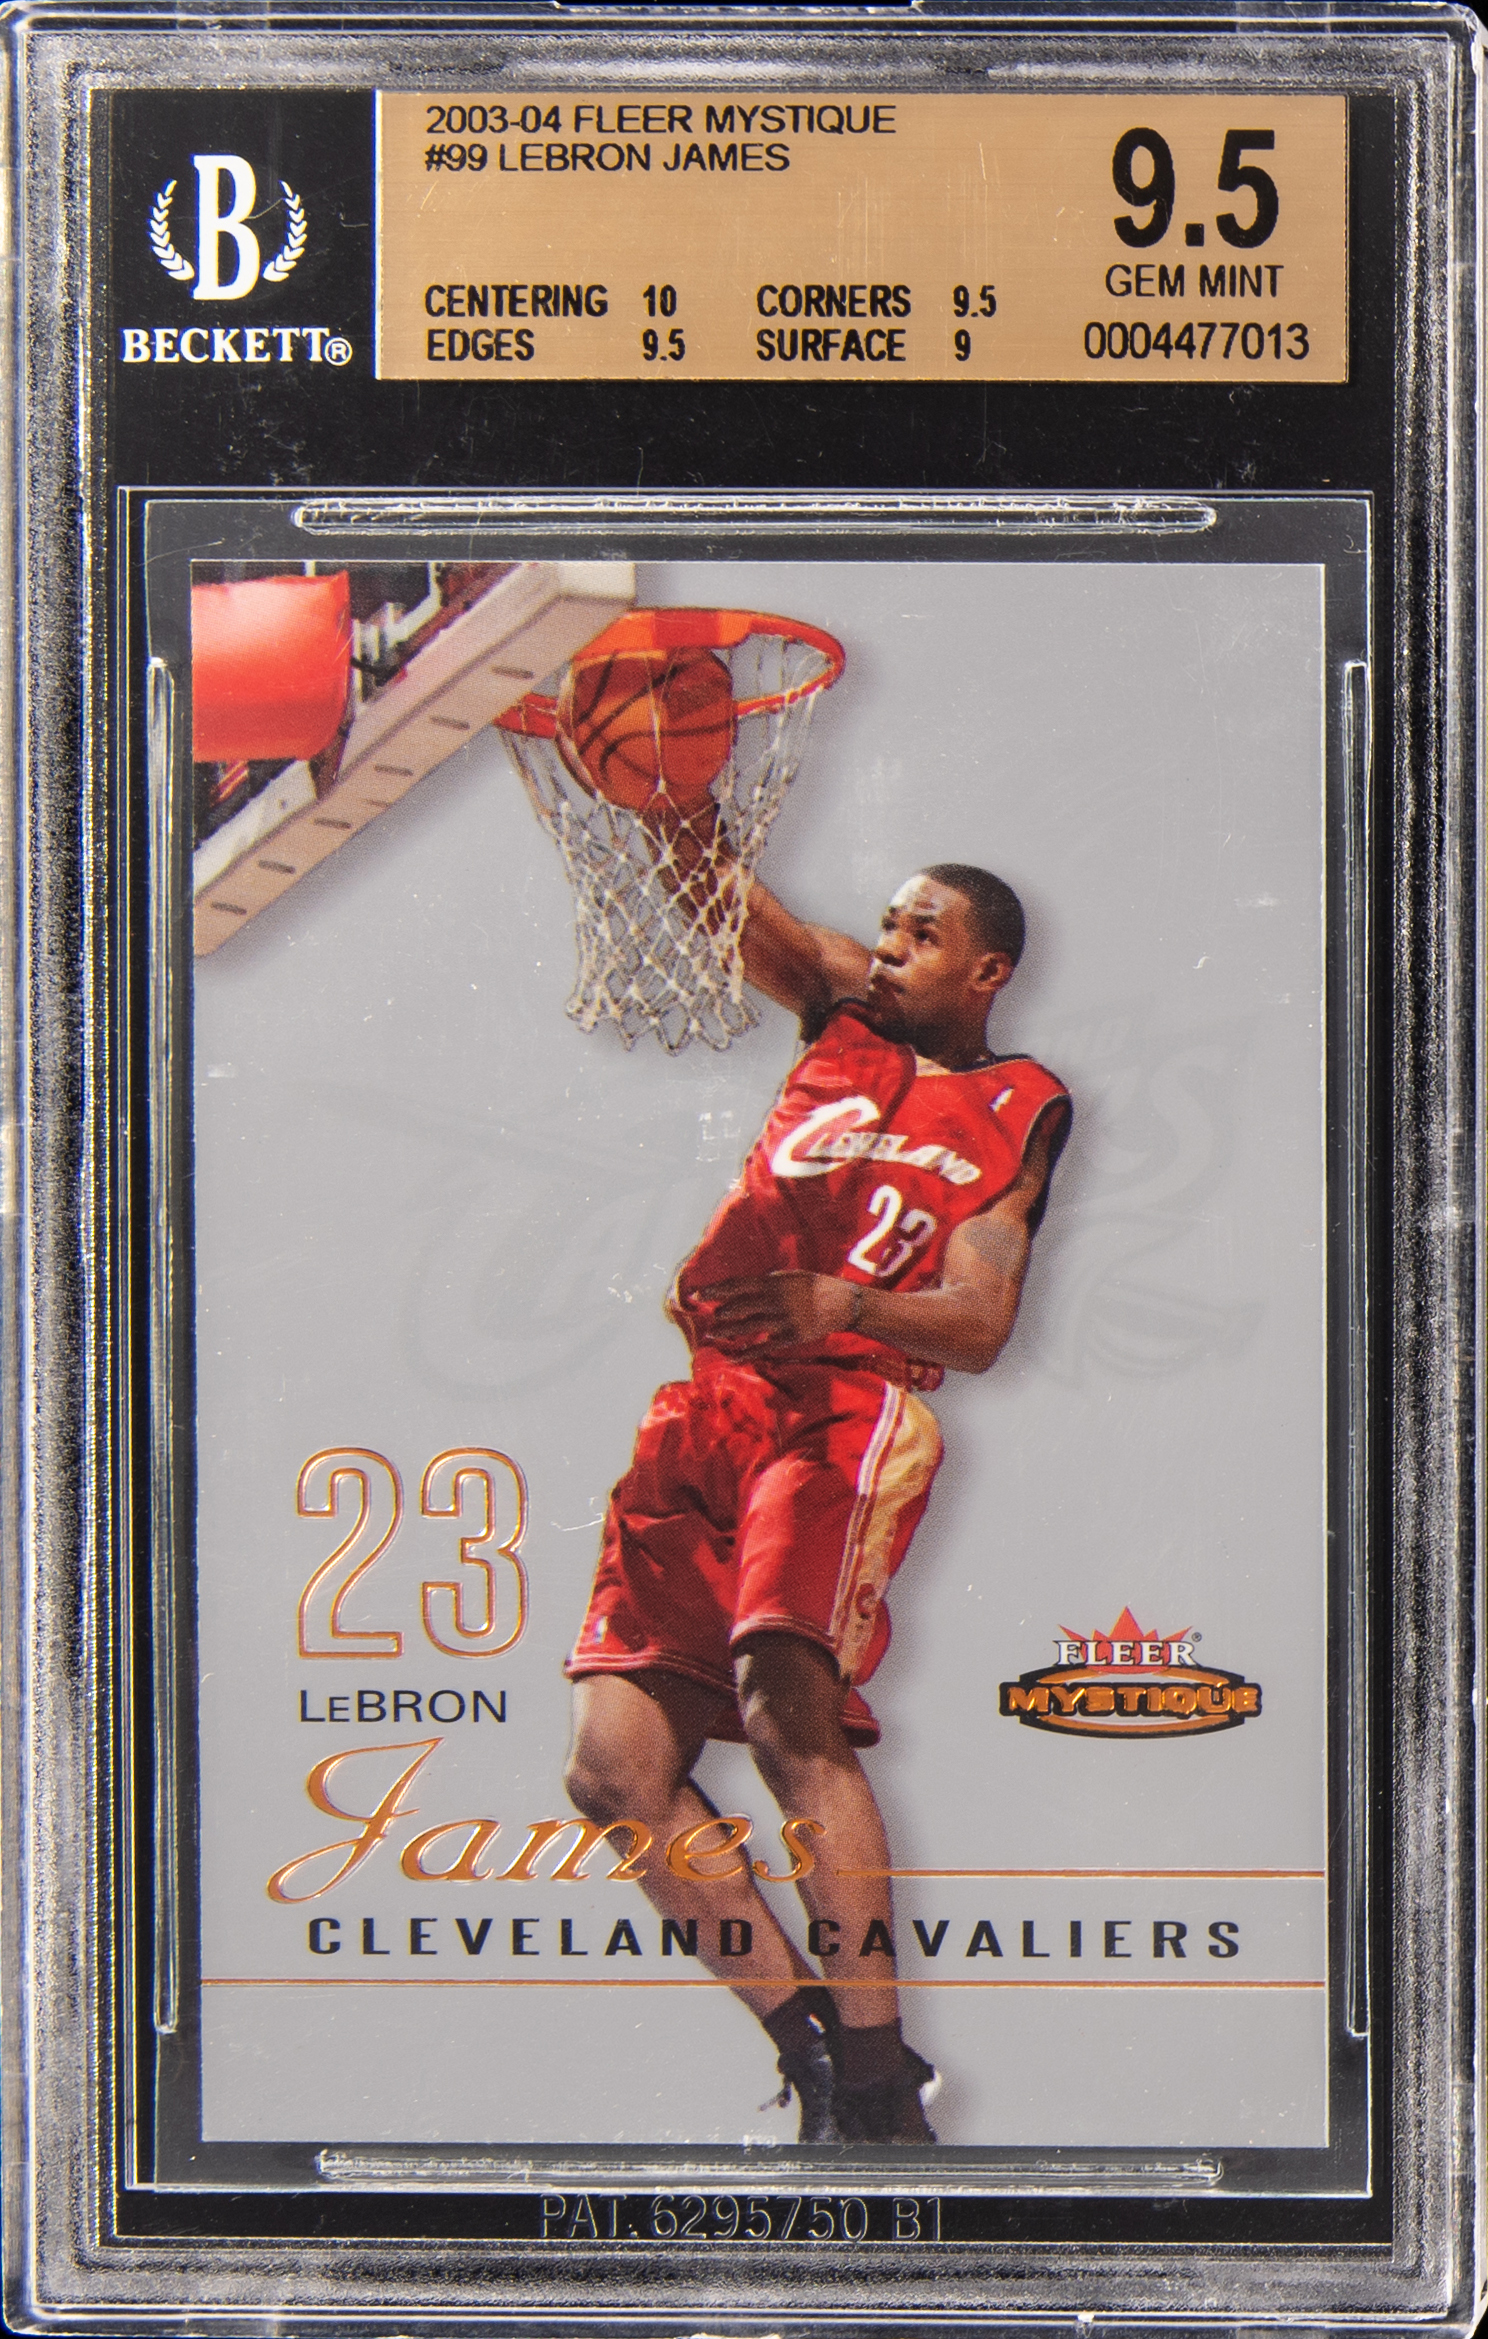 2003-04 Fleer Mystique #99 LeBron James Rookie Card (#827/999) – BGS GEM MINT 9.5